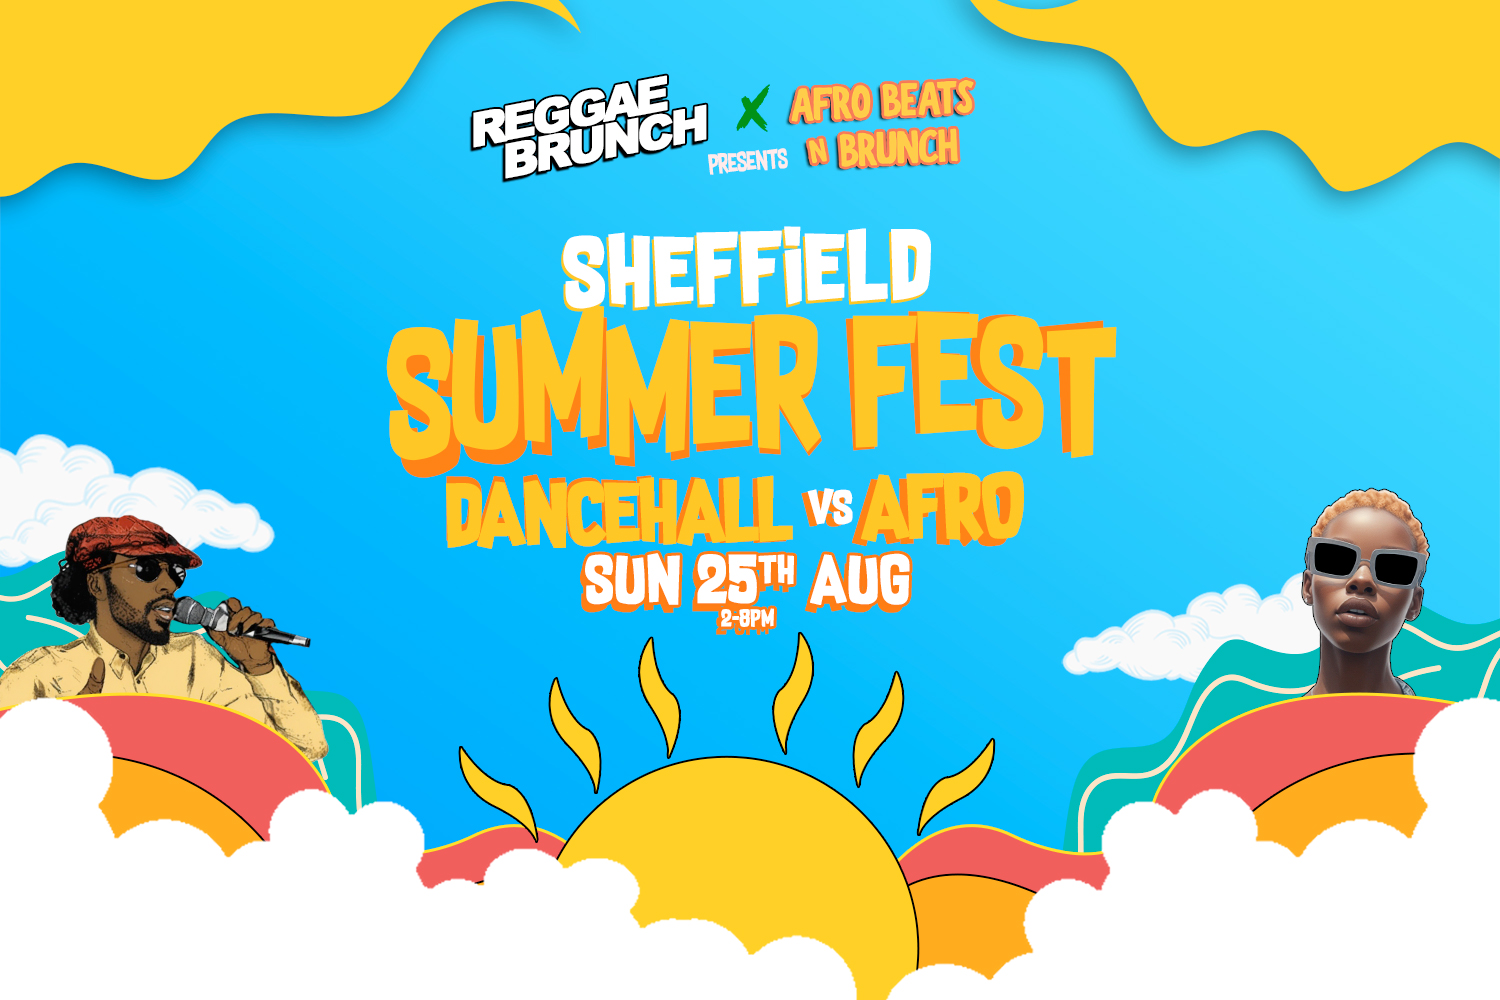 Sun, 25th Aug | Summer Fest Sheffield